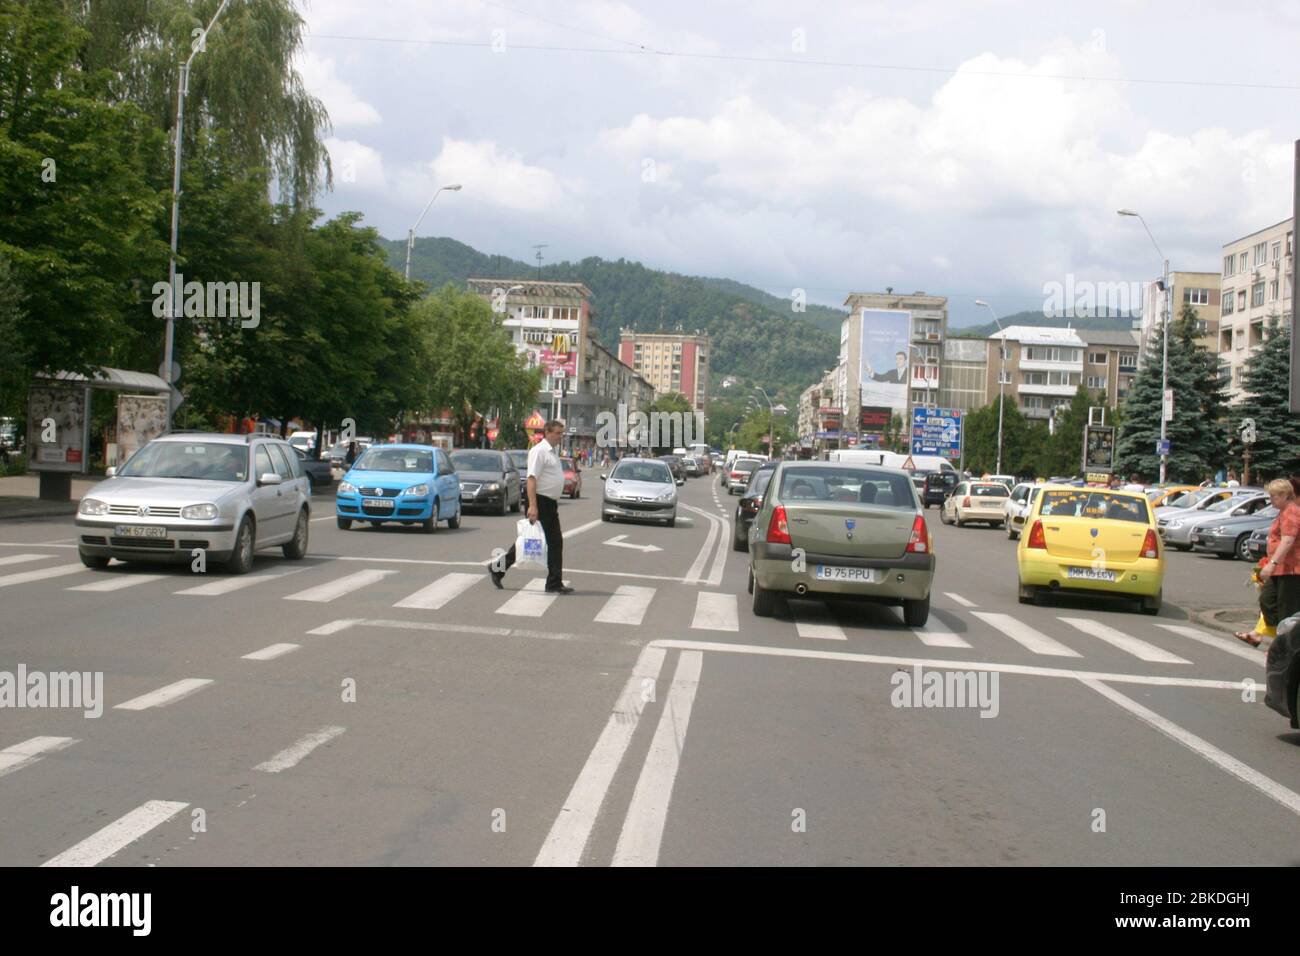 Driving through Baia Mare, Romania. People crossing the street through traffic. Stock Photo